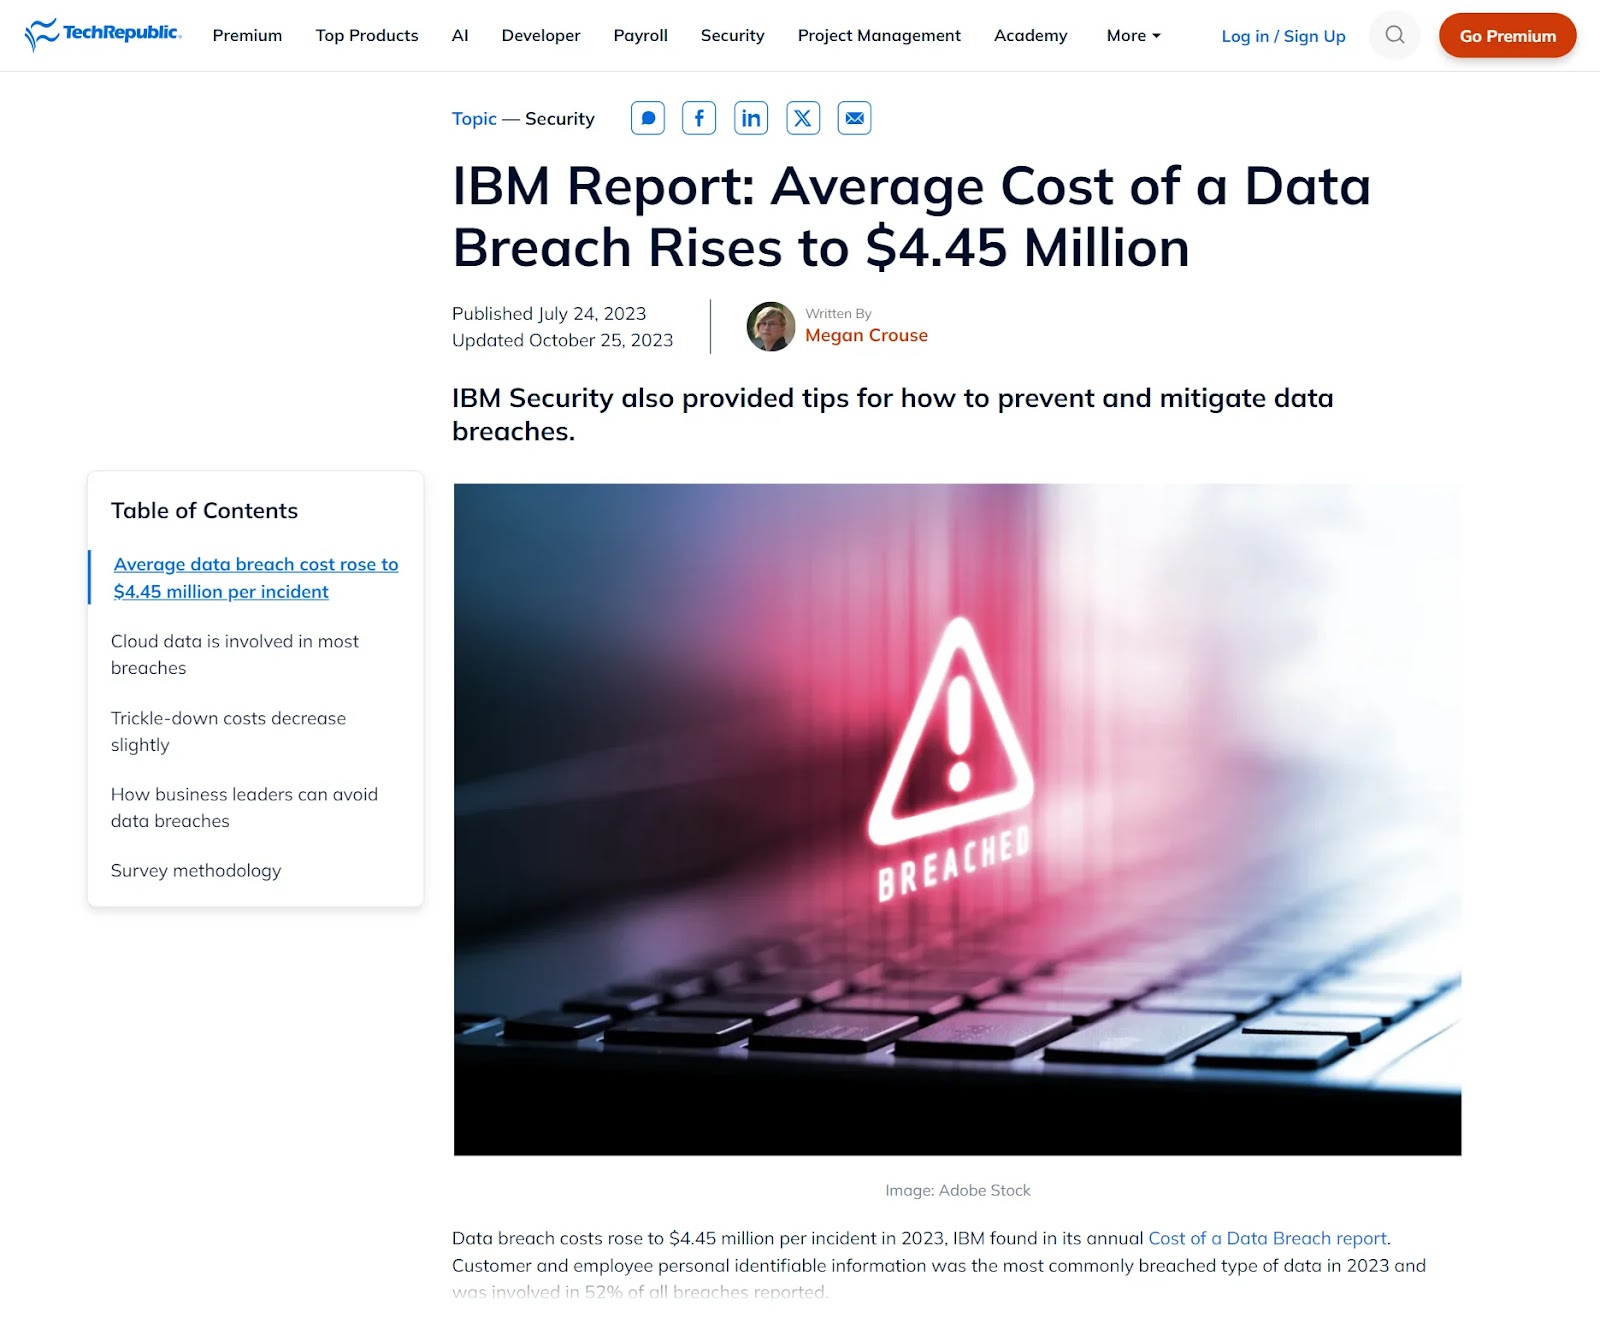 TechRepublic's article on IBM’s Cost of a Data Breach Report